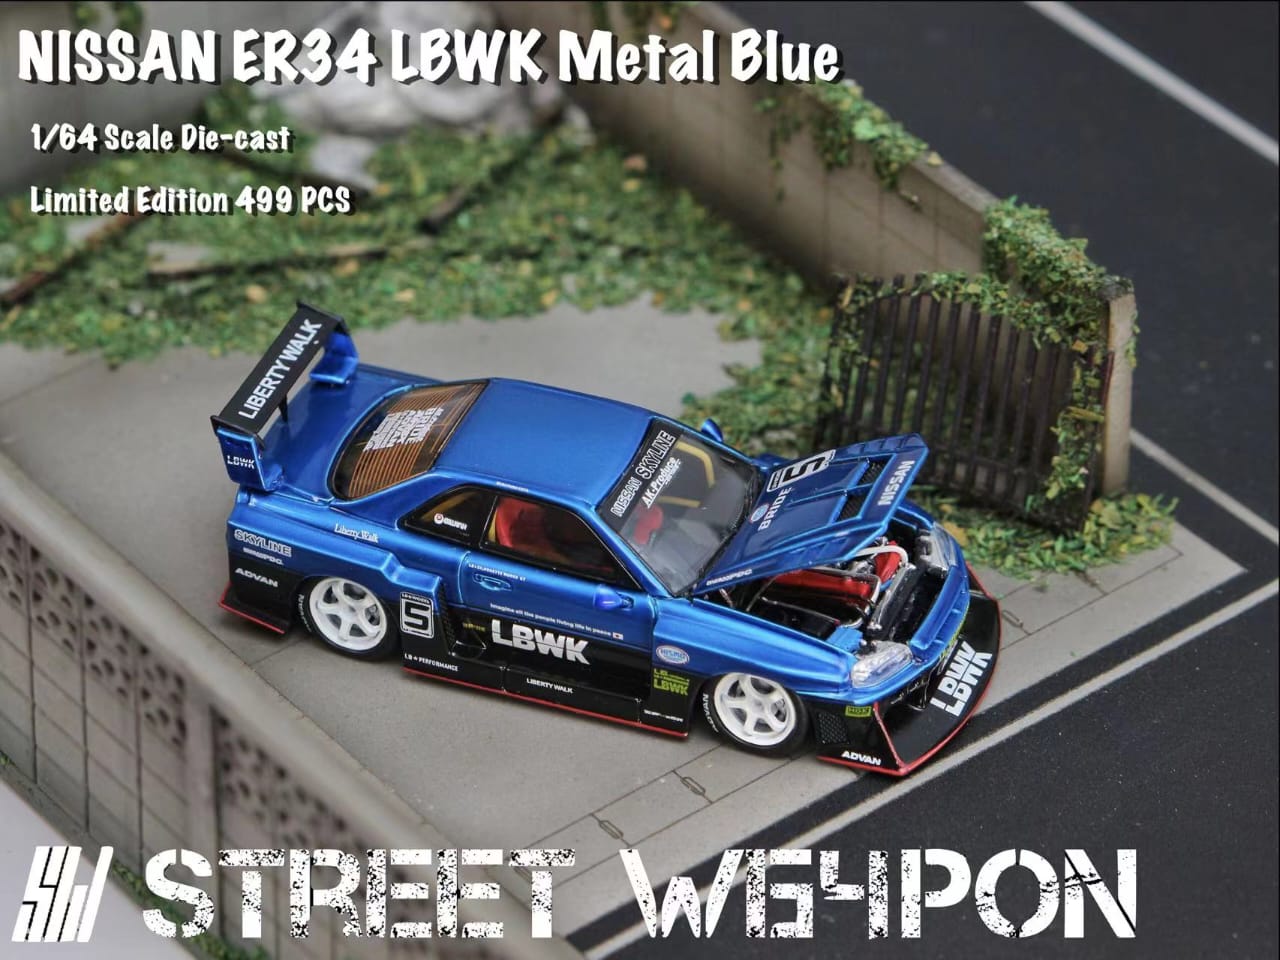 Street Weapon 1/64 Skyline GT-R R34 LB Super Silhouette ER34 - Metallic Blue #5